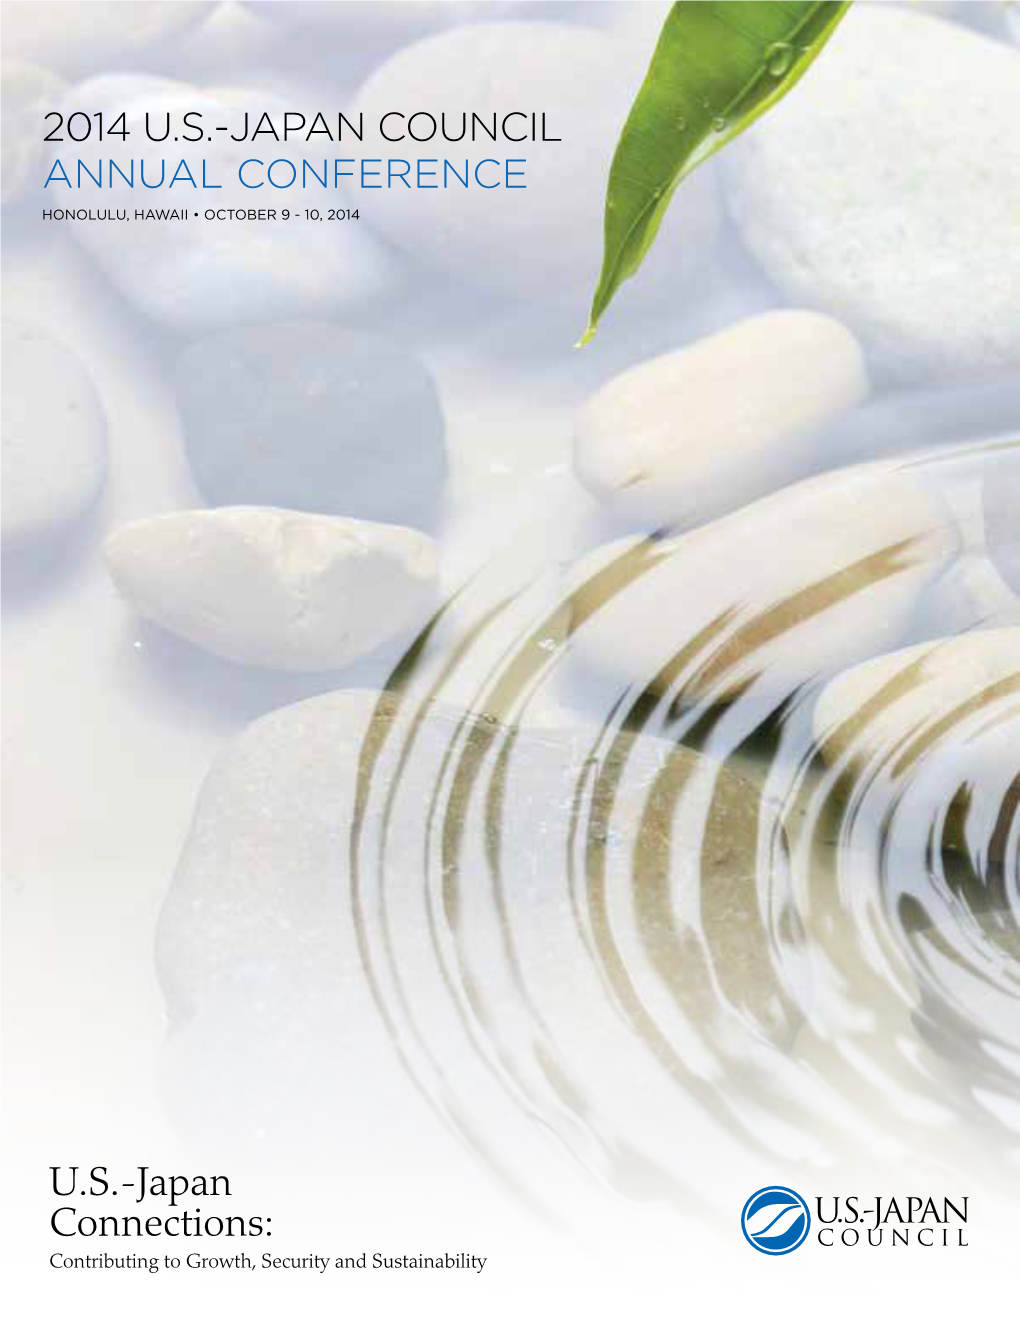 2014 Annual Conference Program